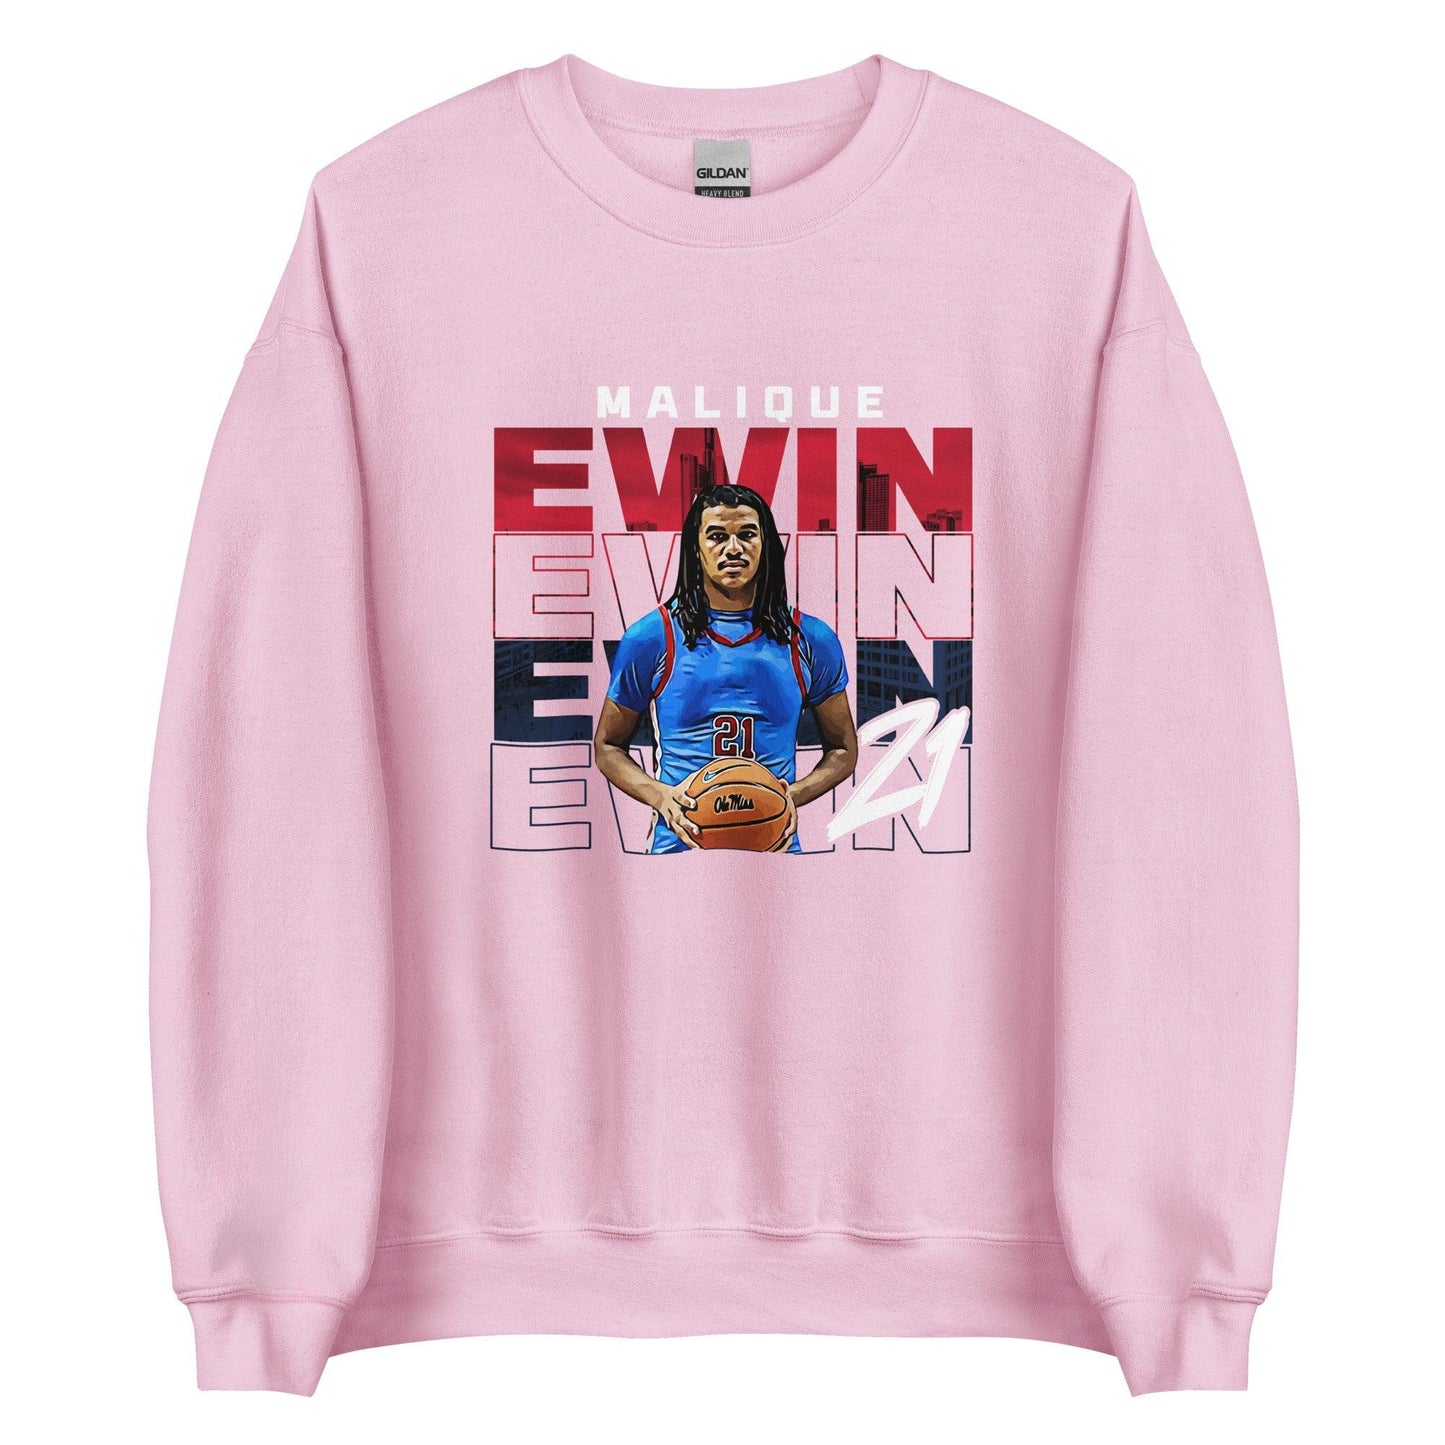 Malique Ewin "Gameday" Sweatshirt - Fan Arch